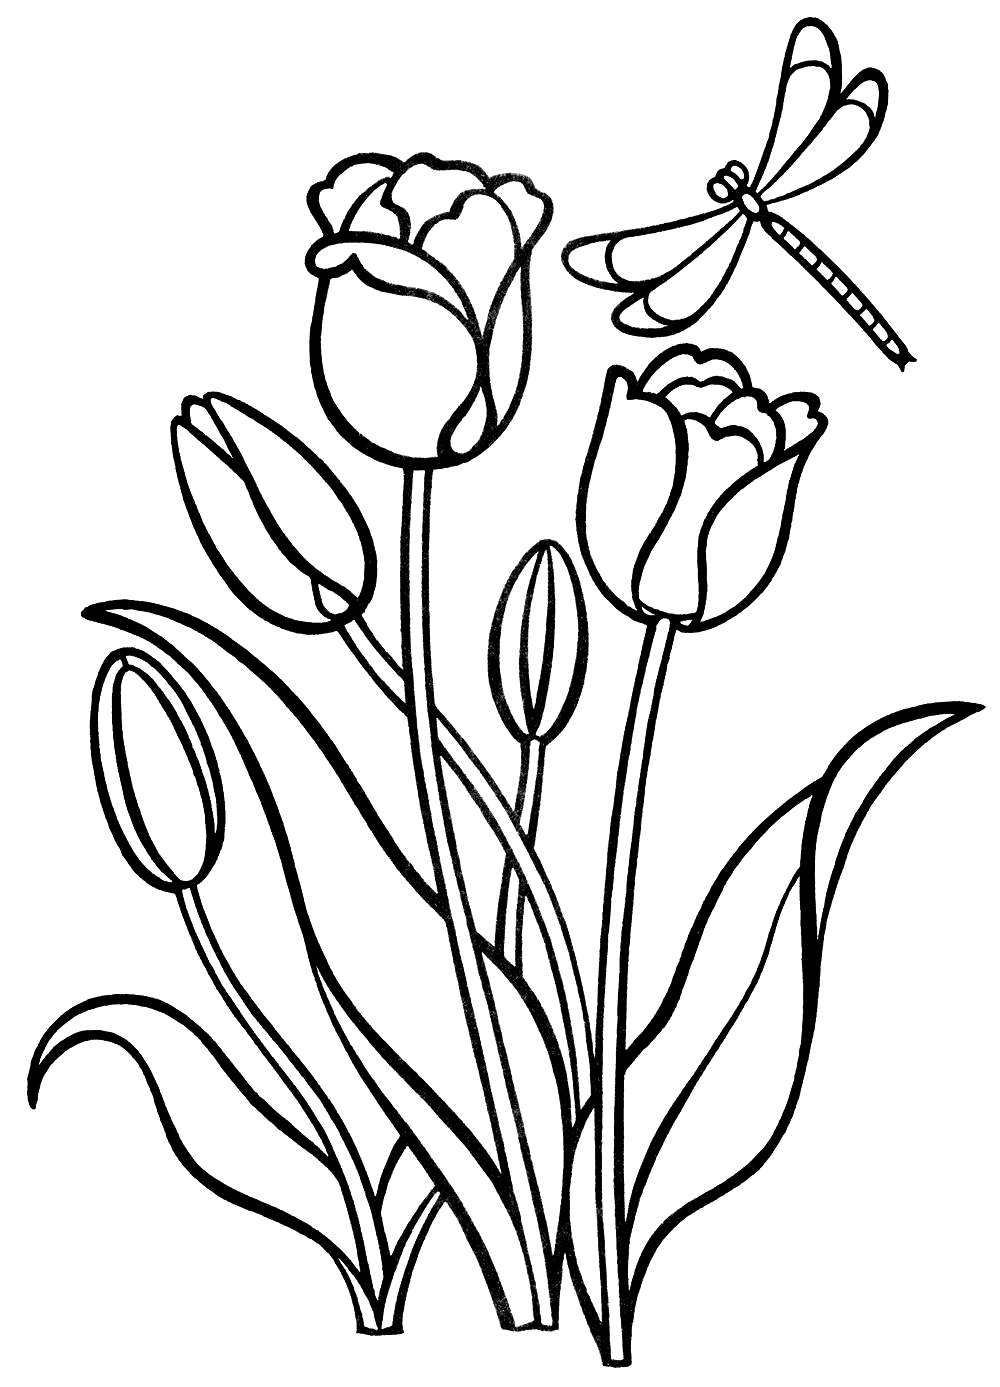 Dibujo para colorear - Tulipanes.